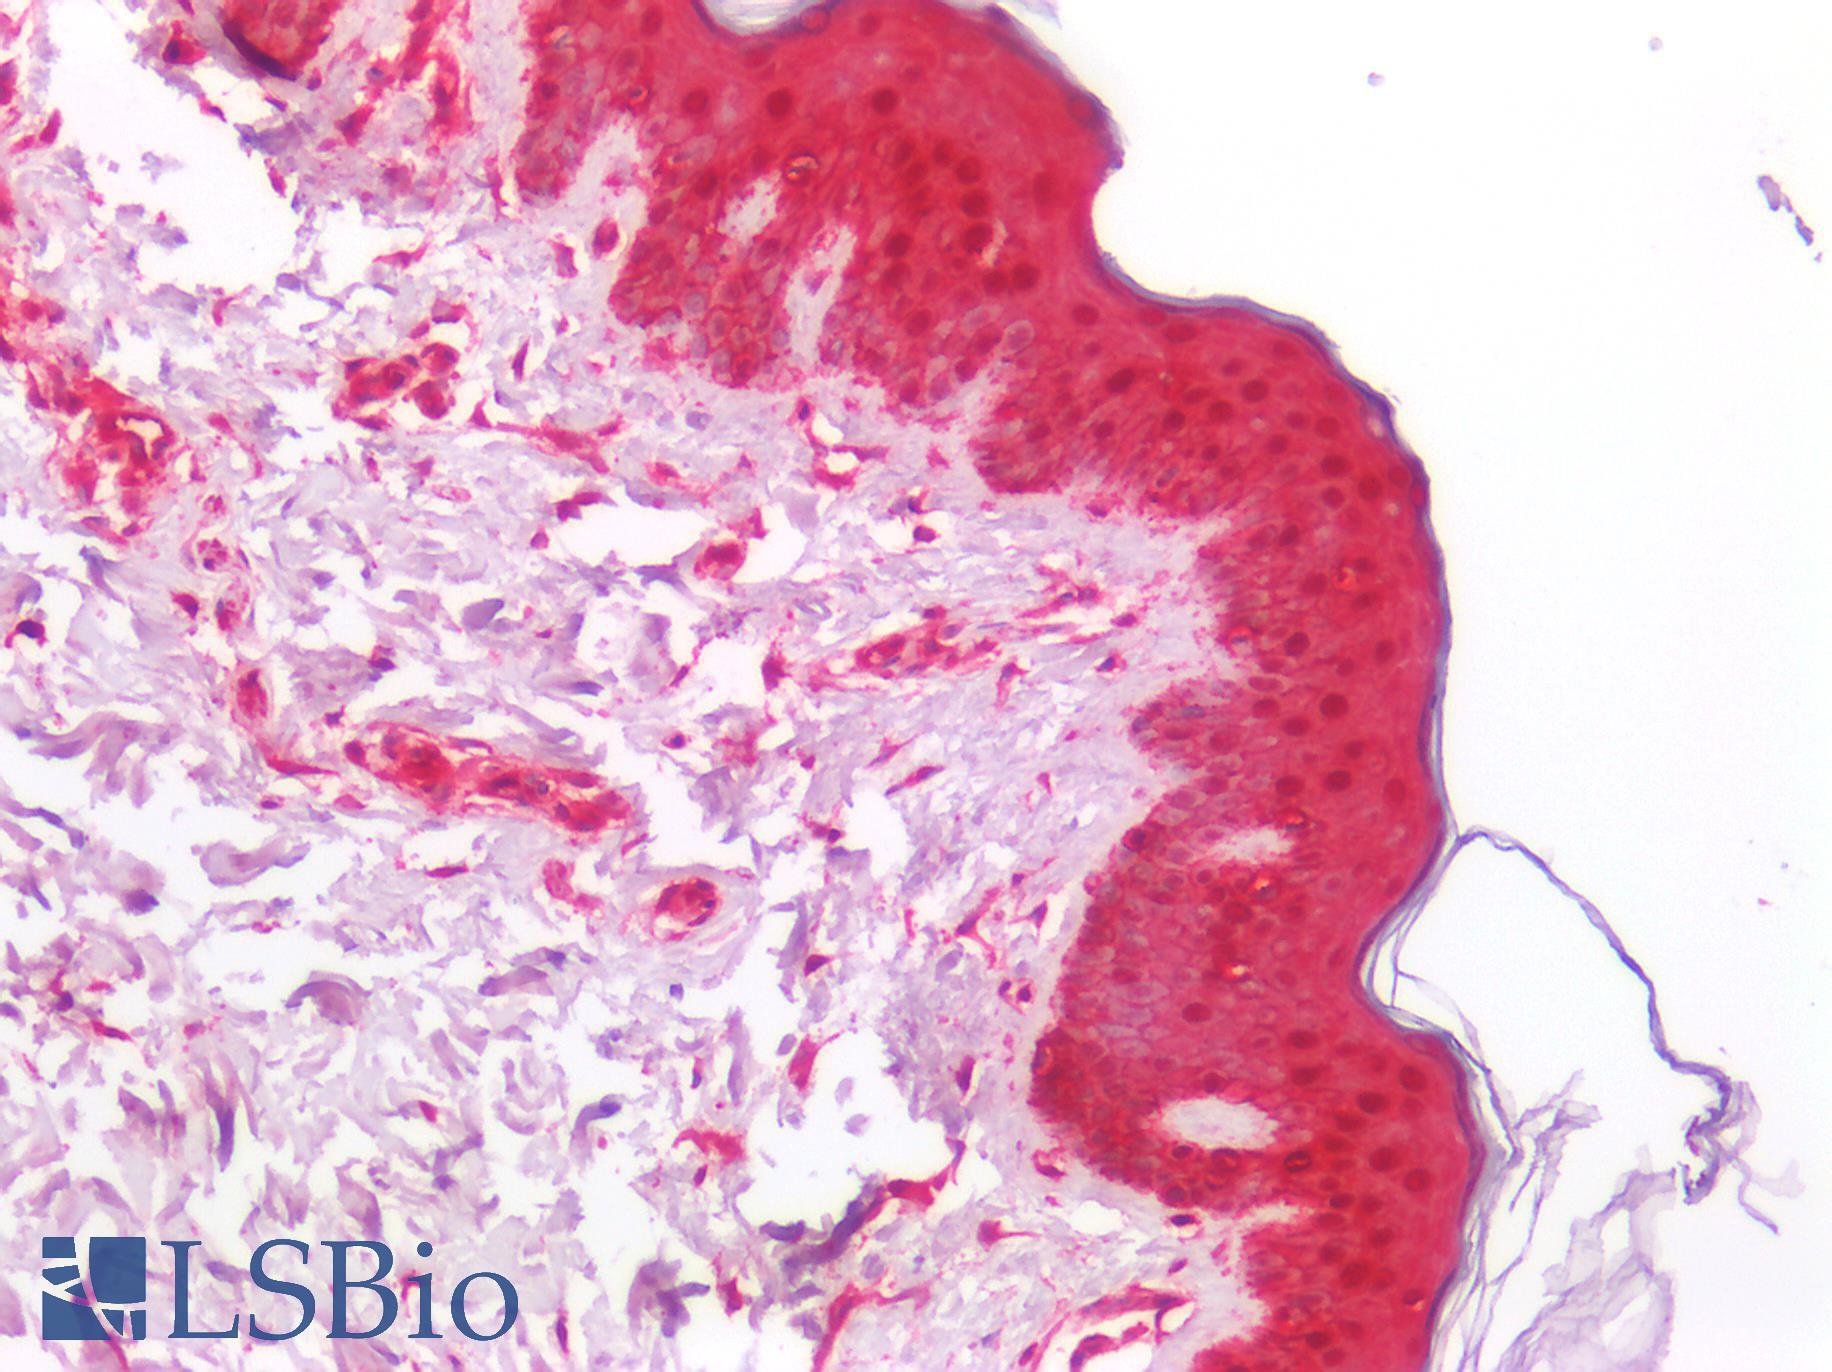 NDRG1 Antibody - Human Skin: Formalin-Fixed, Paraffin-Embedded (FFPE)